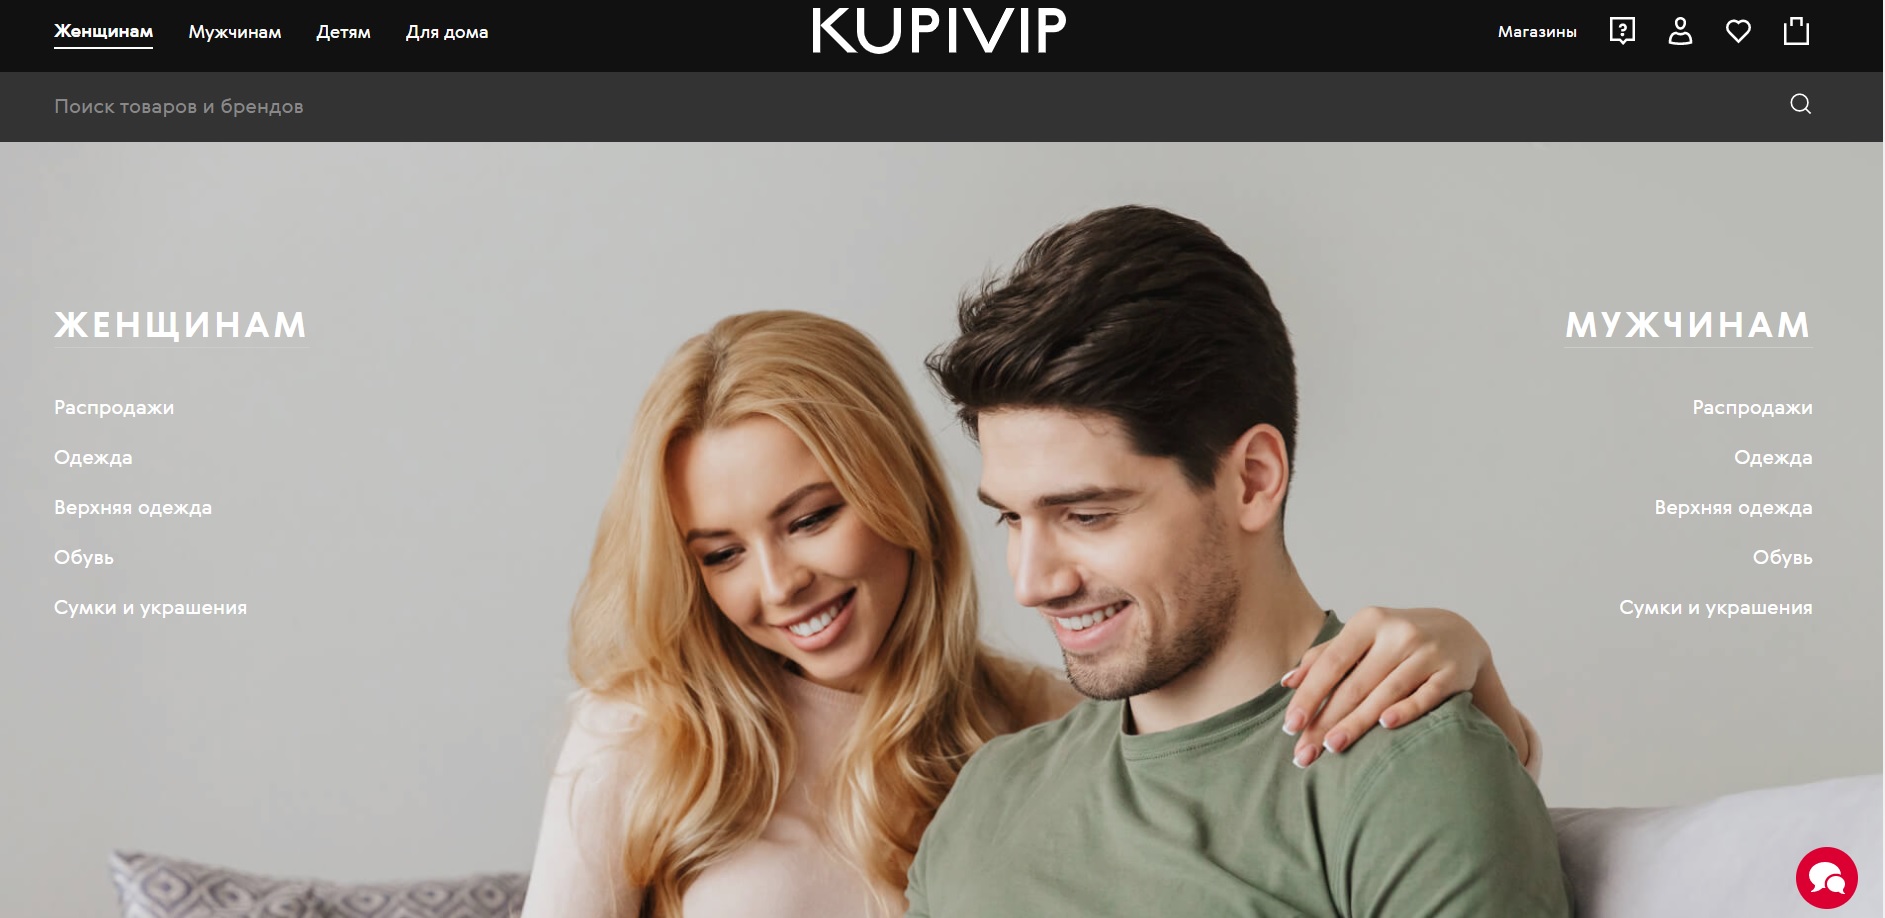 Kupivip ru. Реклама KUPIVIP. Обзор интернет сайта. Команда купи вип.